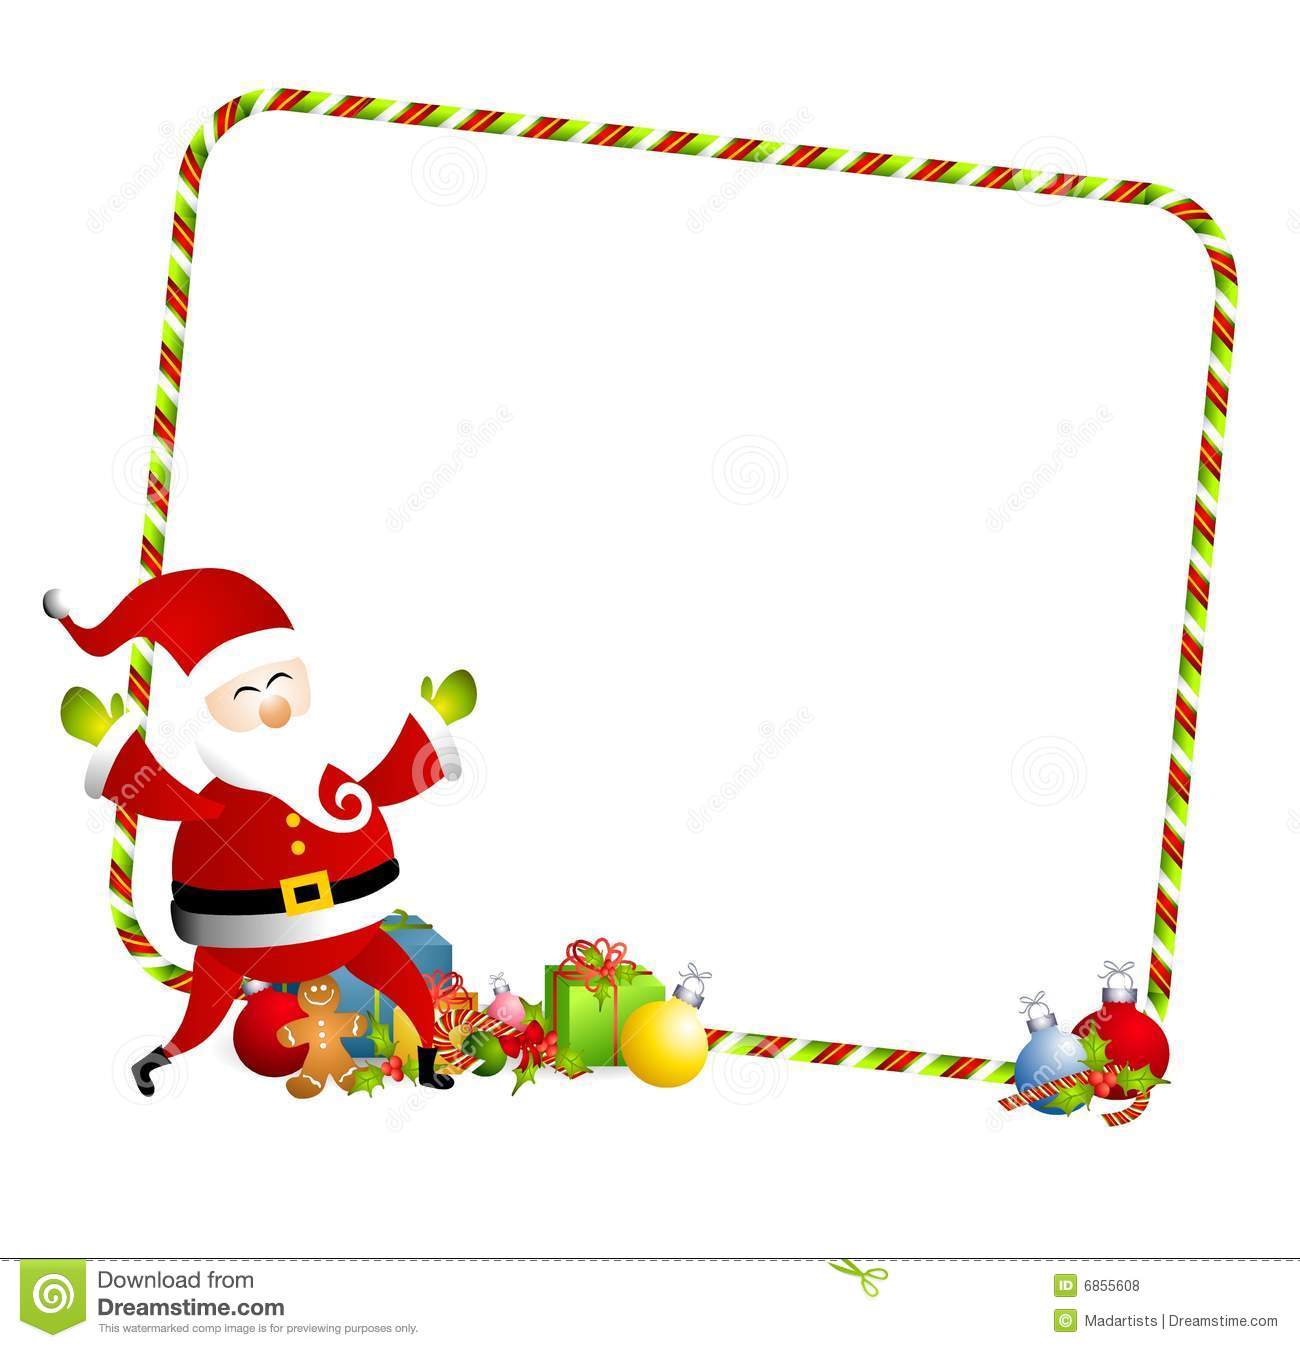 Christmas Present Border Clipart Christmas Santa Border 3 6855608 Jpg